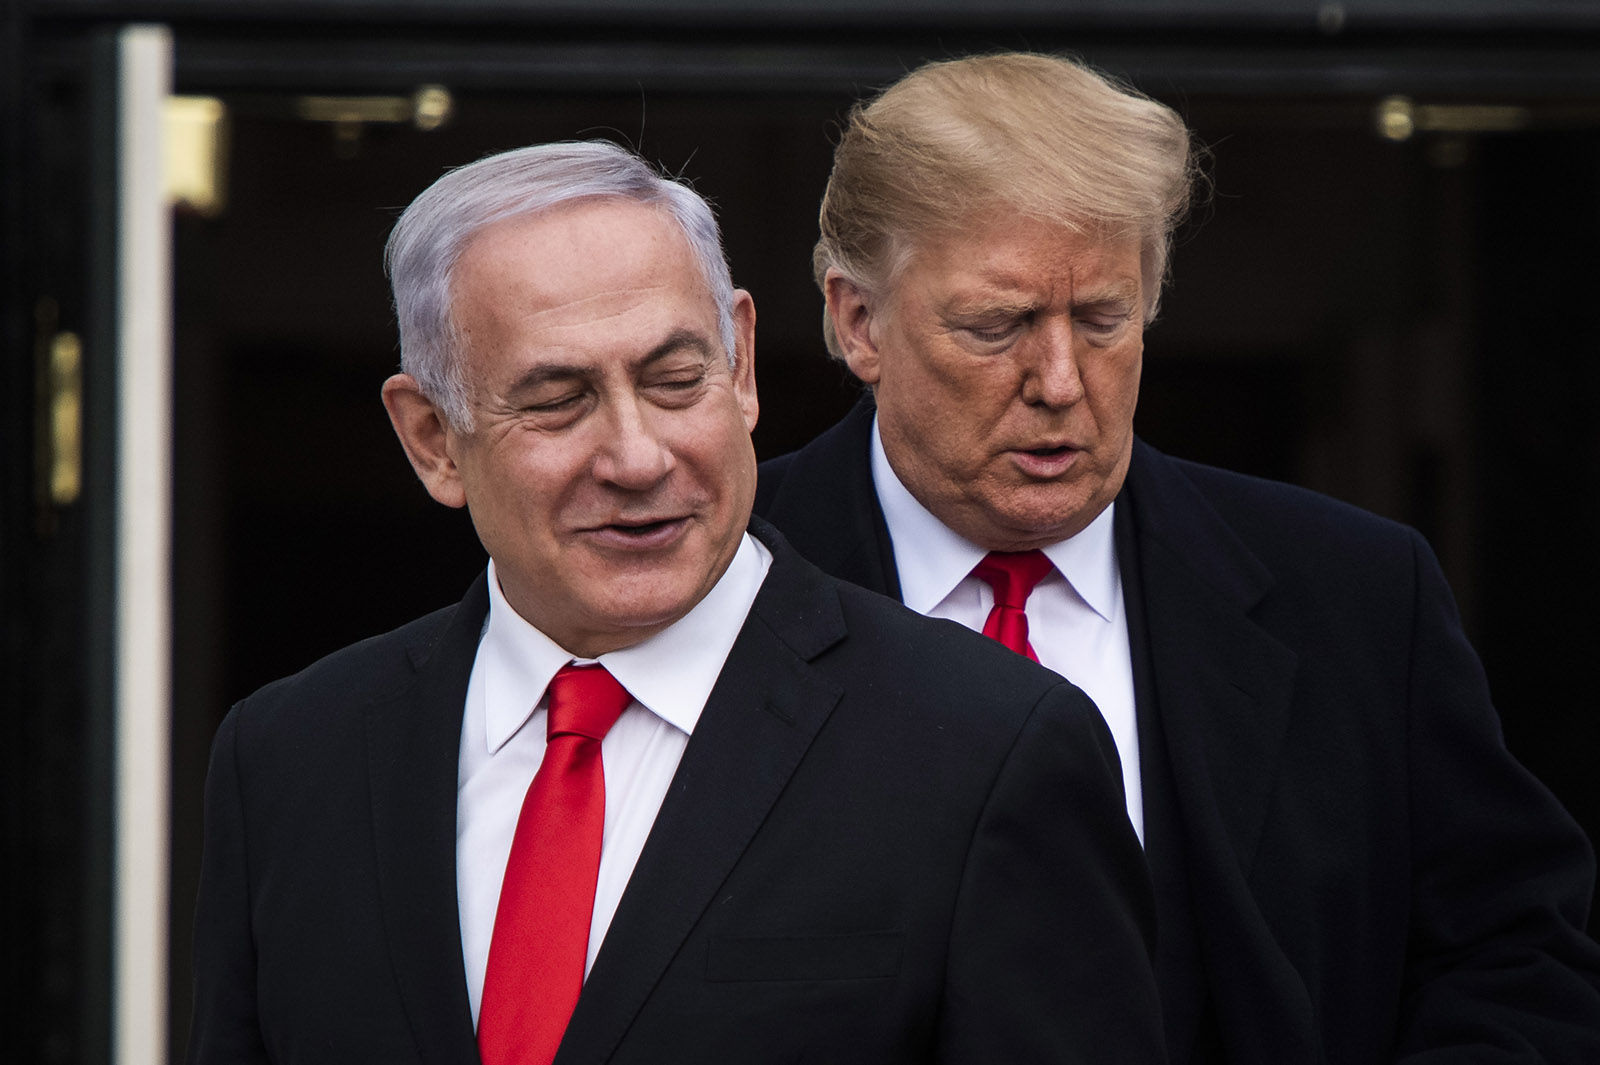 Israeli Prime Minister Benjamin Netanyahu with US President Donald Trump at the White House, Washington, D.C., March 25, 2019